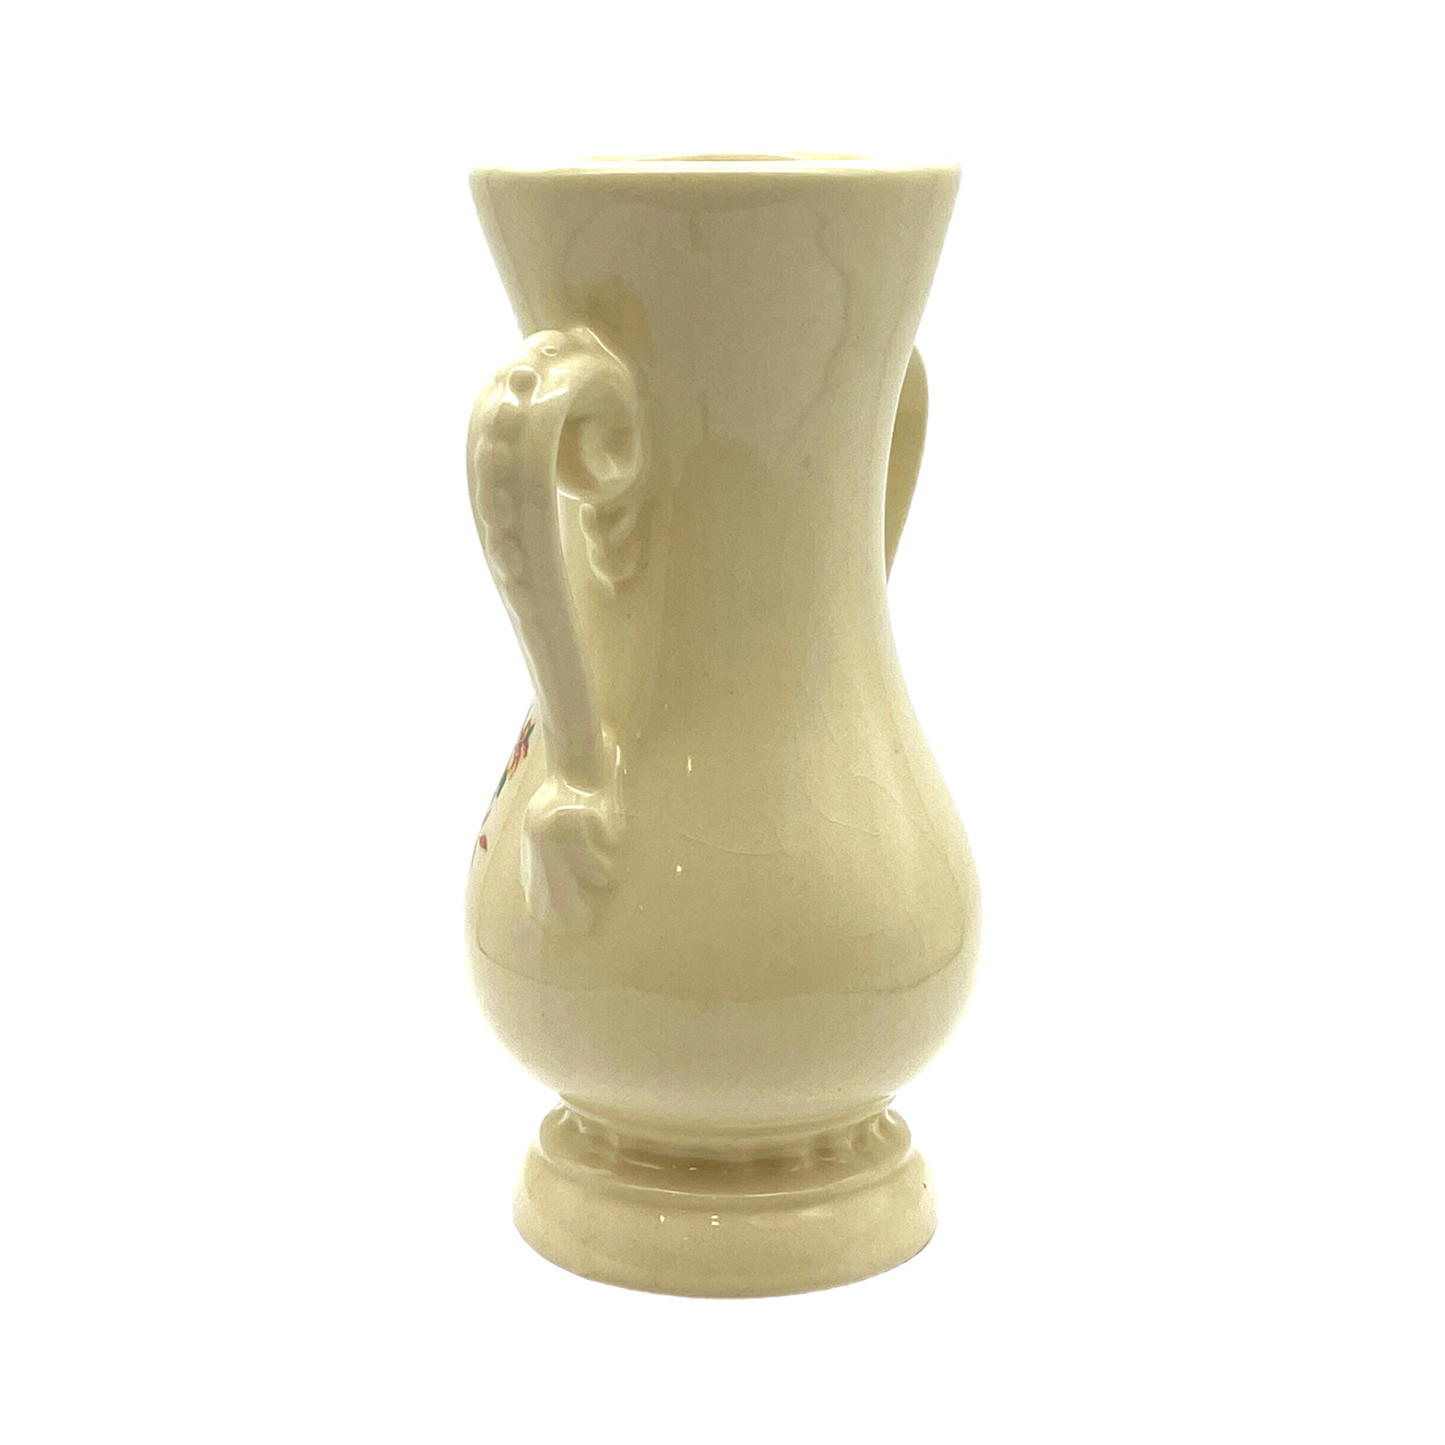 Royal Copley - Two Handle Decal Vase - Roses - Vintage - 6.25"